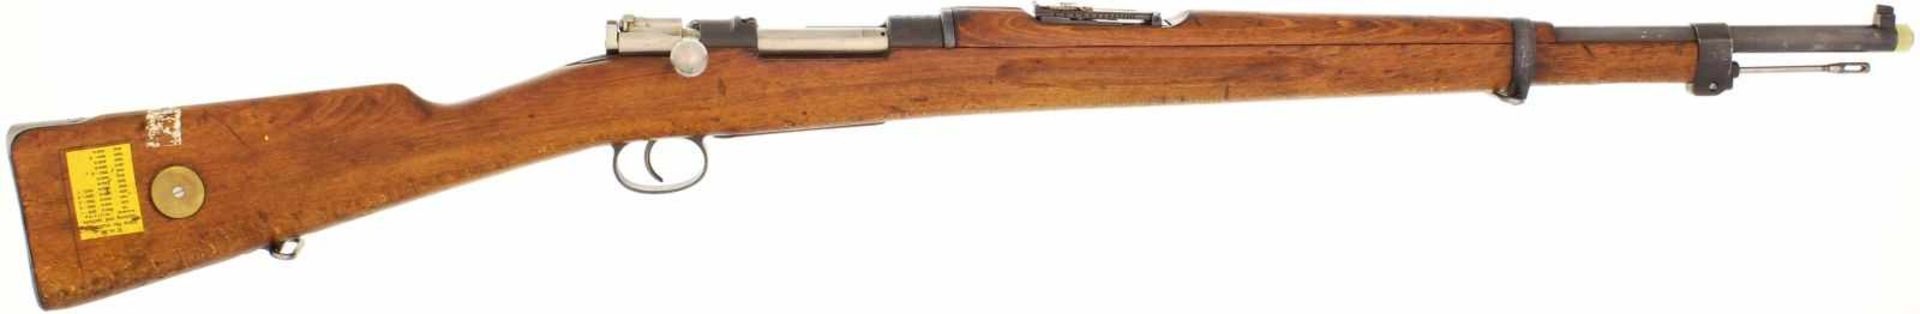 Repetiergewehr, Mauser, Karabiner m/96, hergestellt 1900 Kal. 6.5x55mm@ LL 600mm, TL 1120mm,